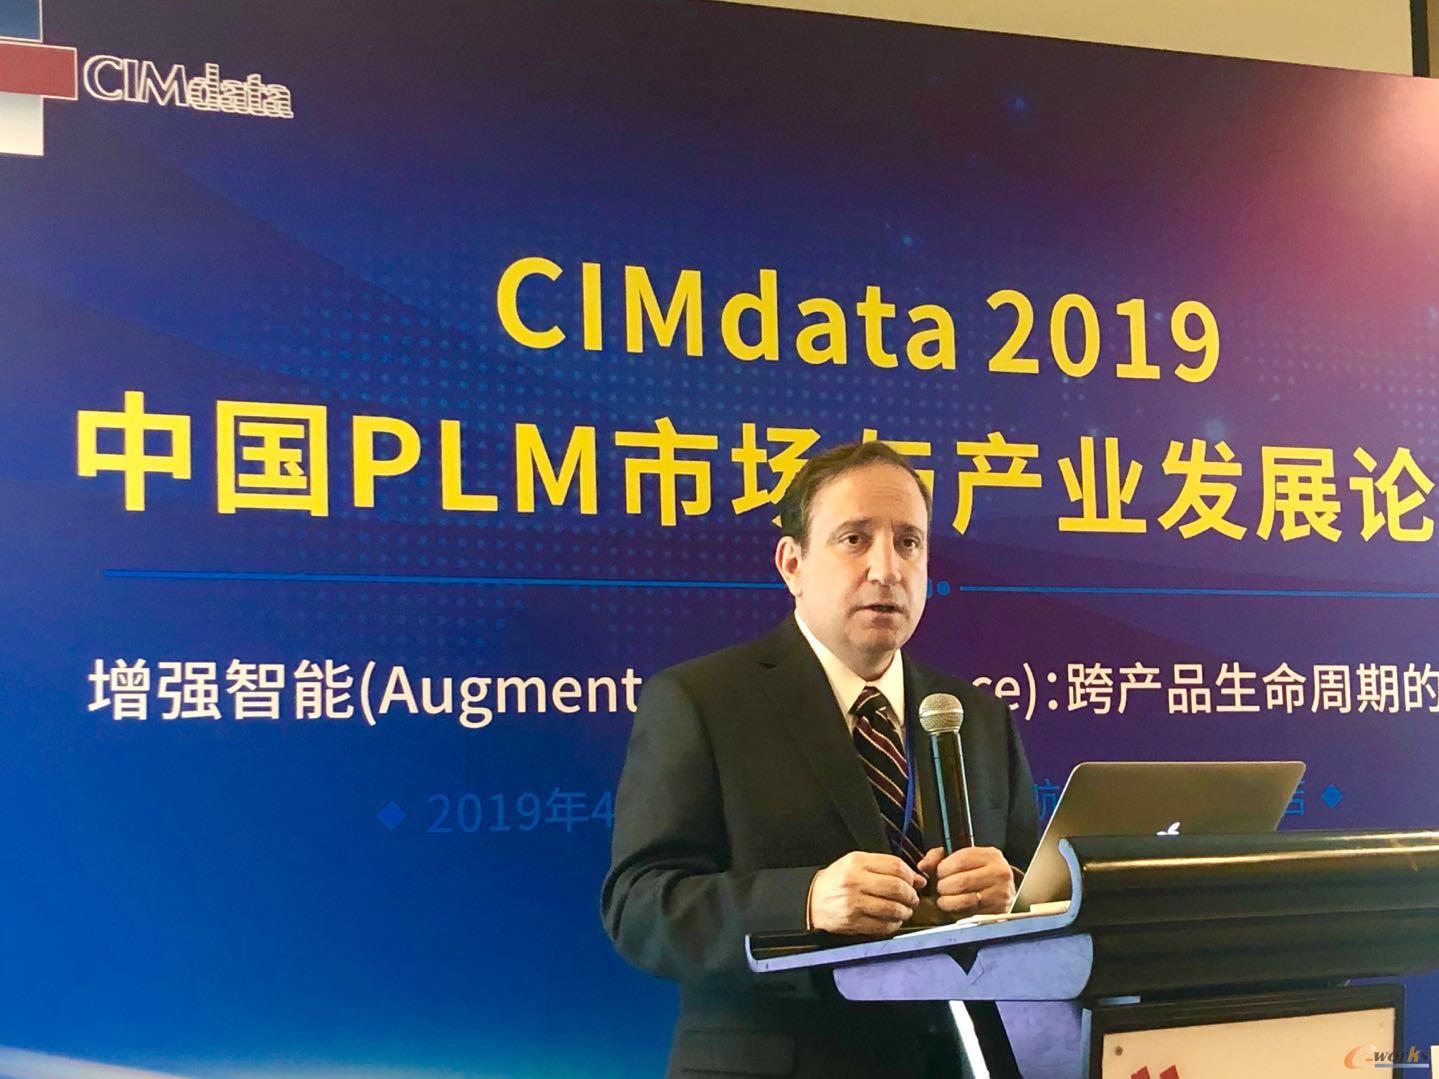 CIMdata 2019中国PLM市场与产业发展论坛成功举办